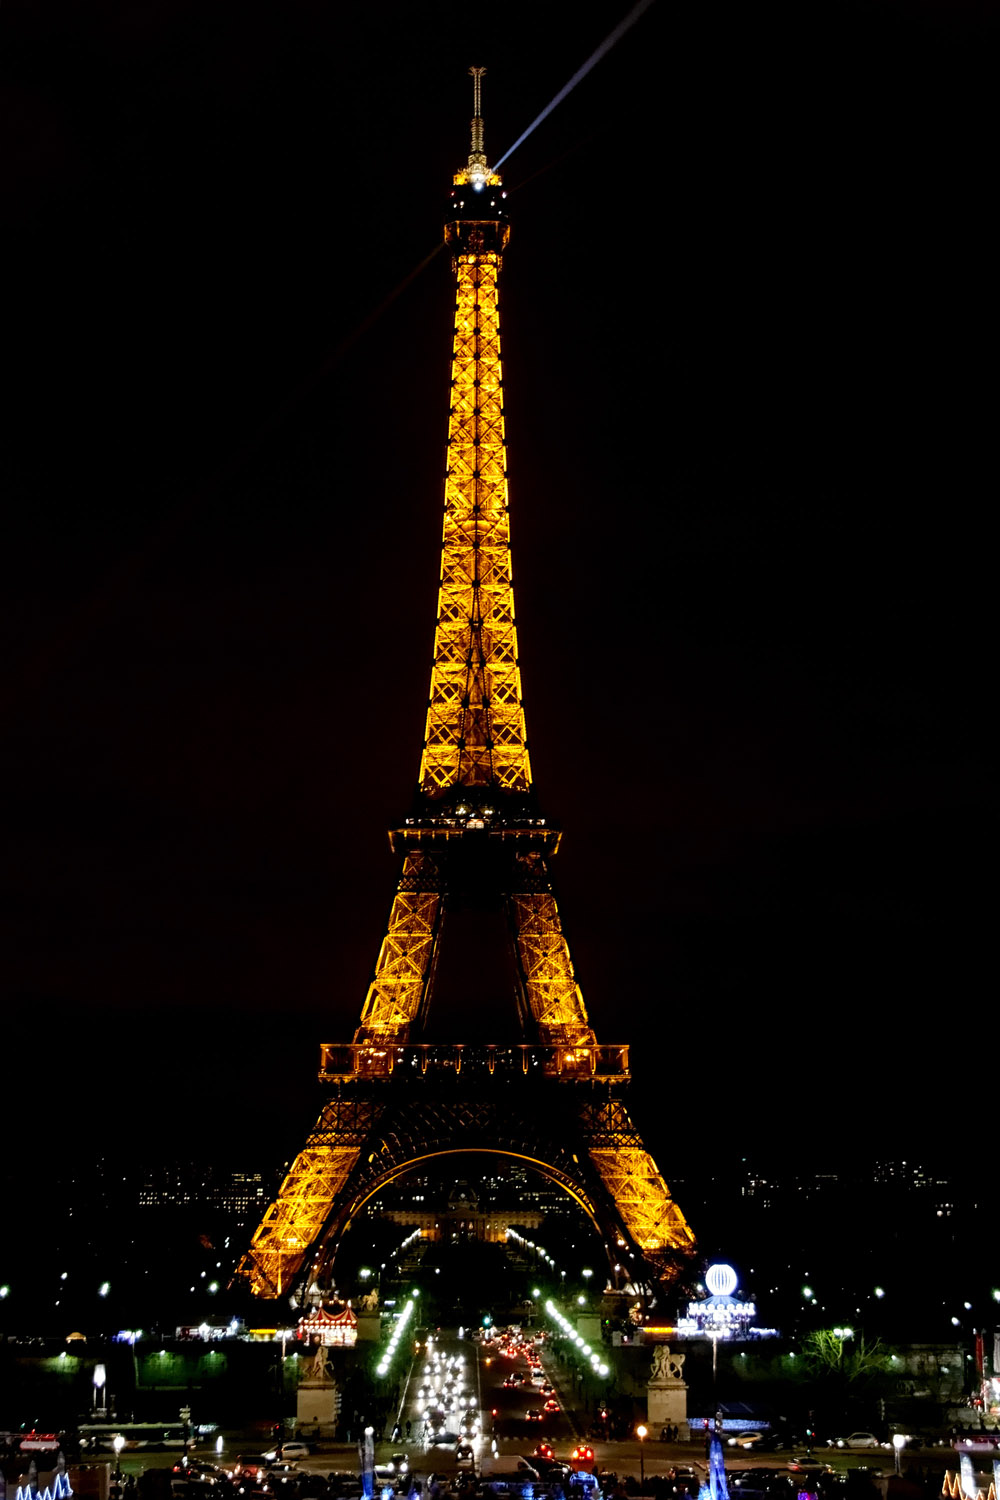 The Eiffel tower seen from the Trocadéro